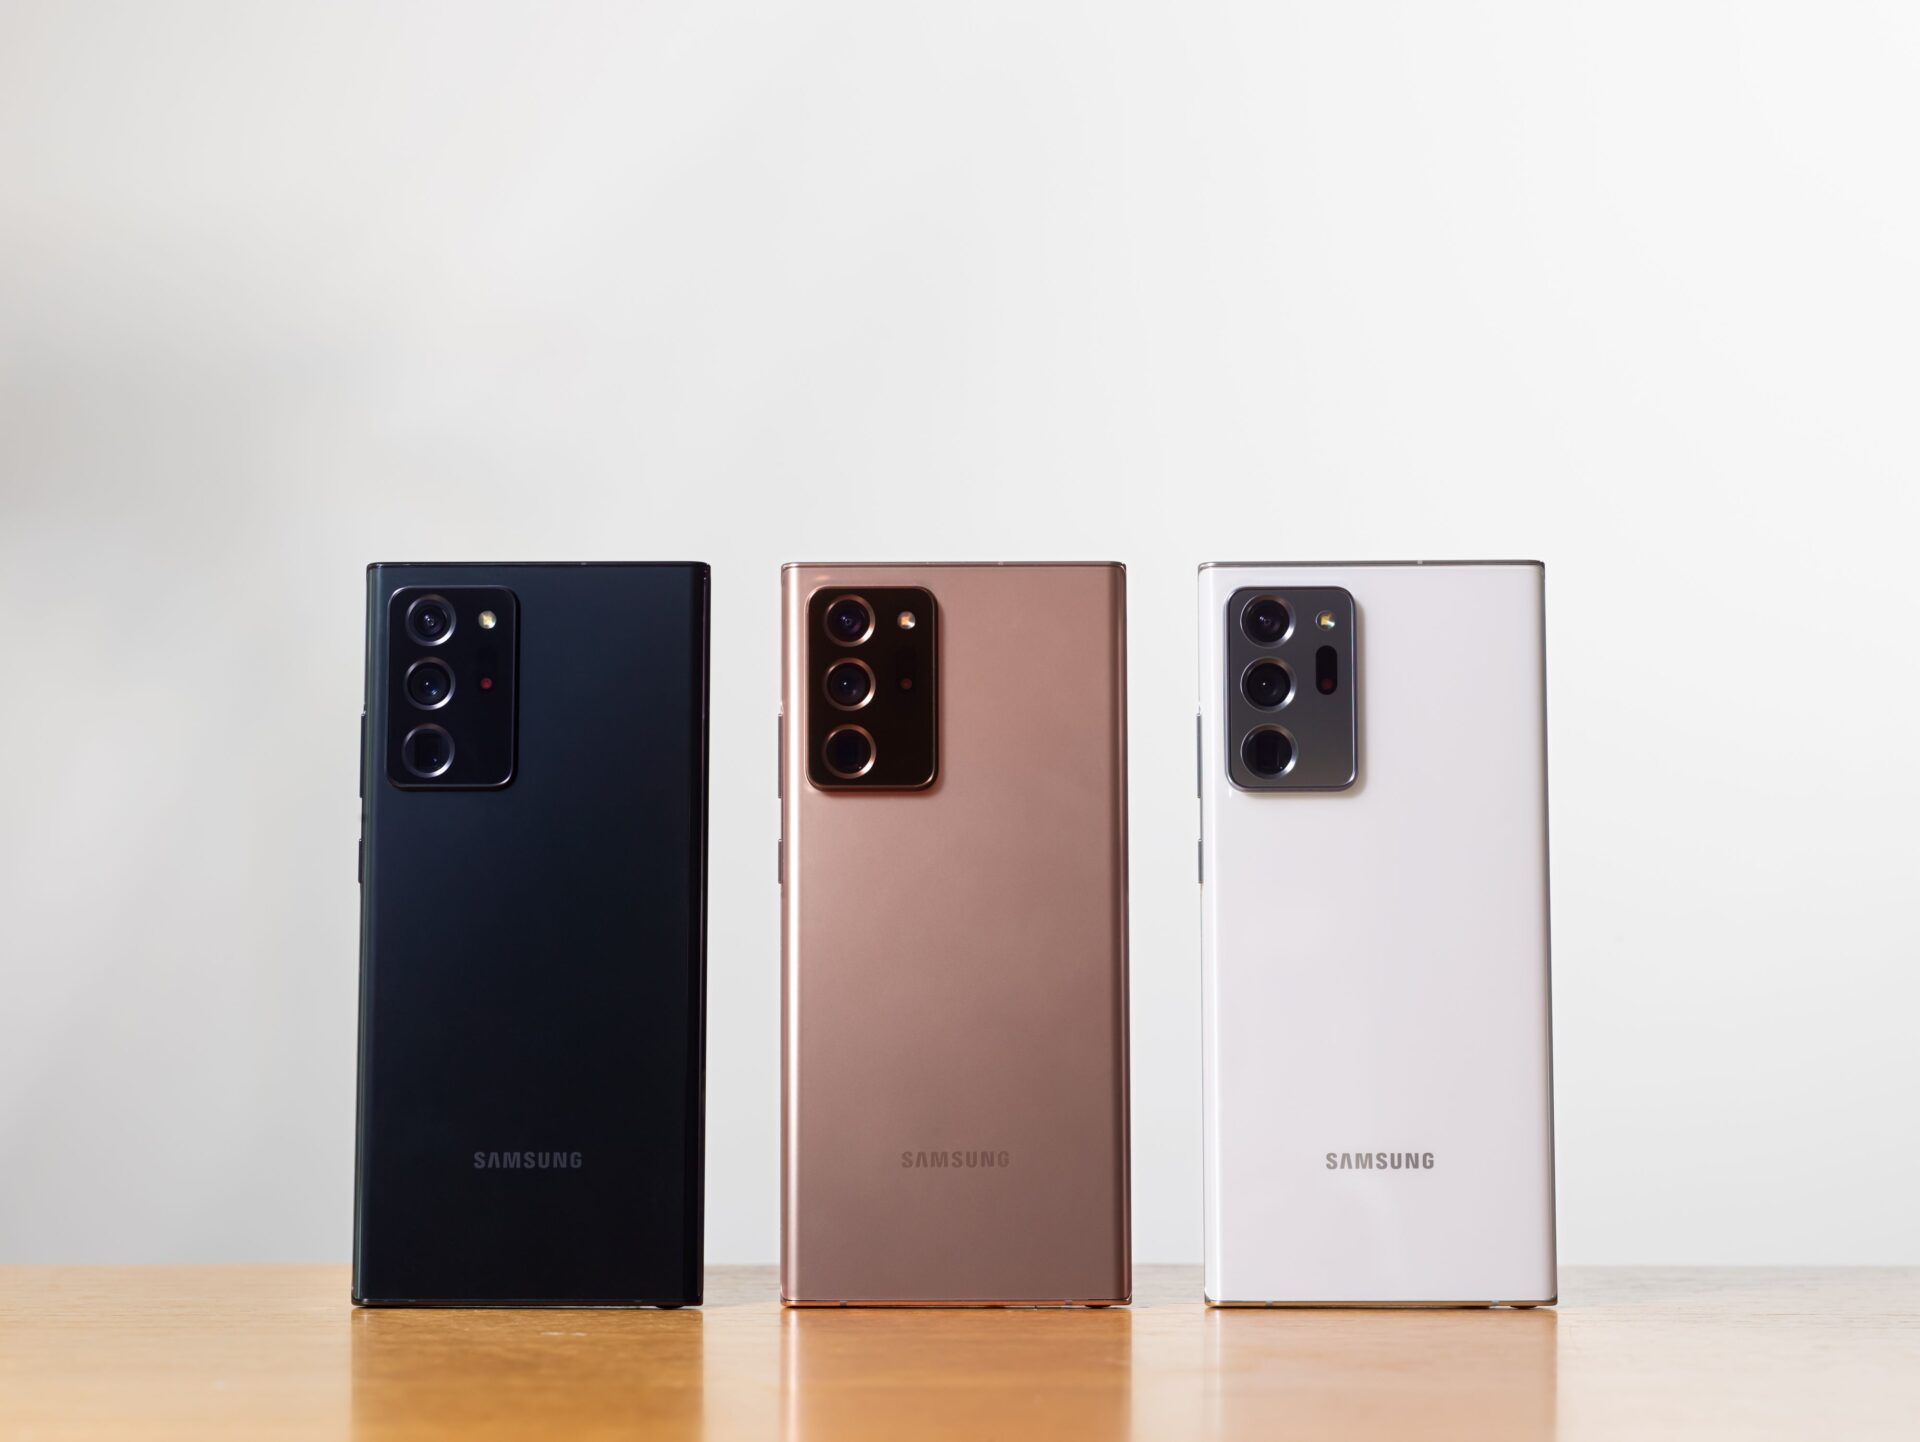 Samsung's new Galaxy Note 20 Ultra looks sleek with slim design, near